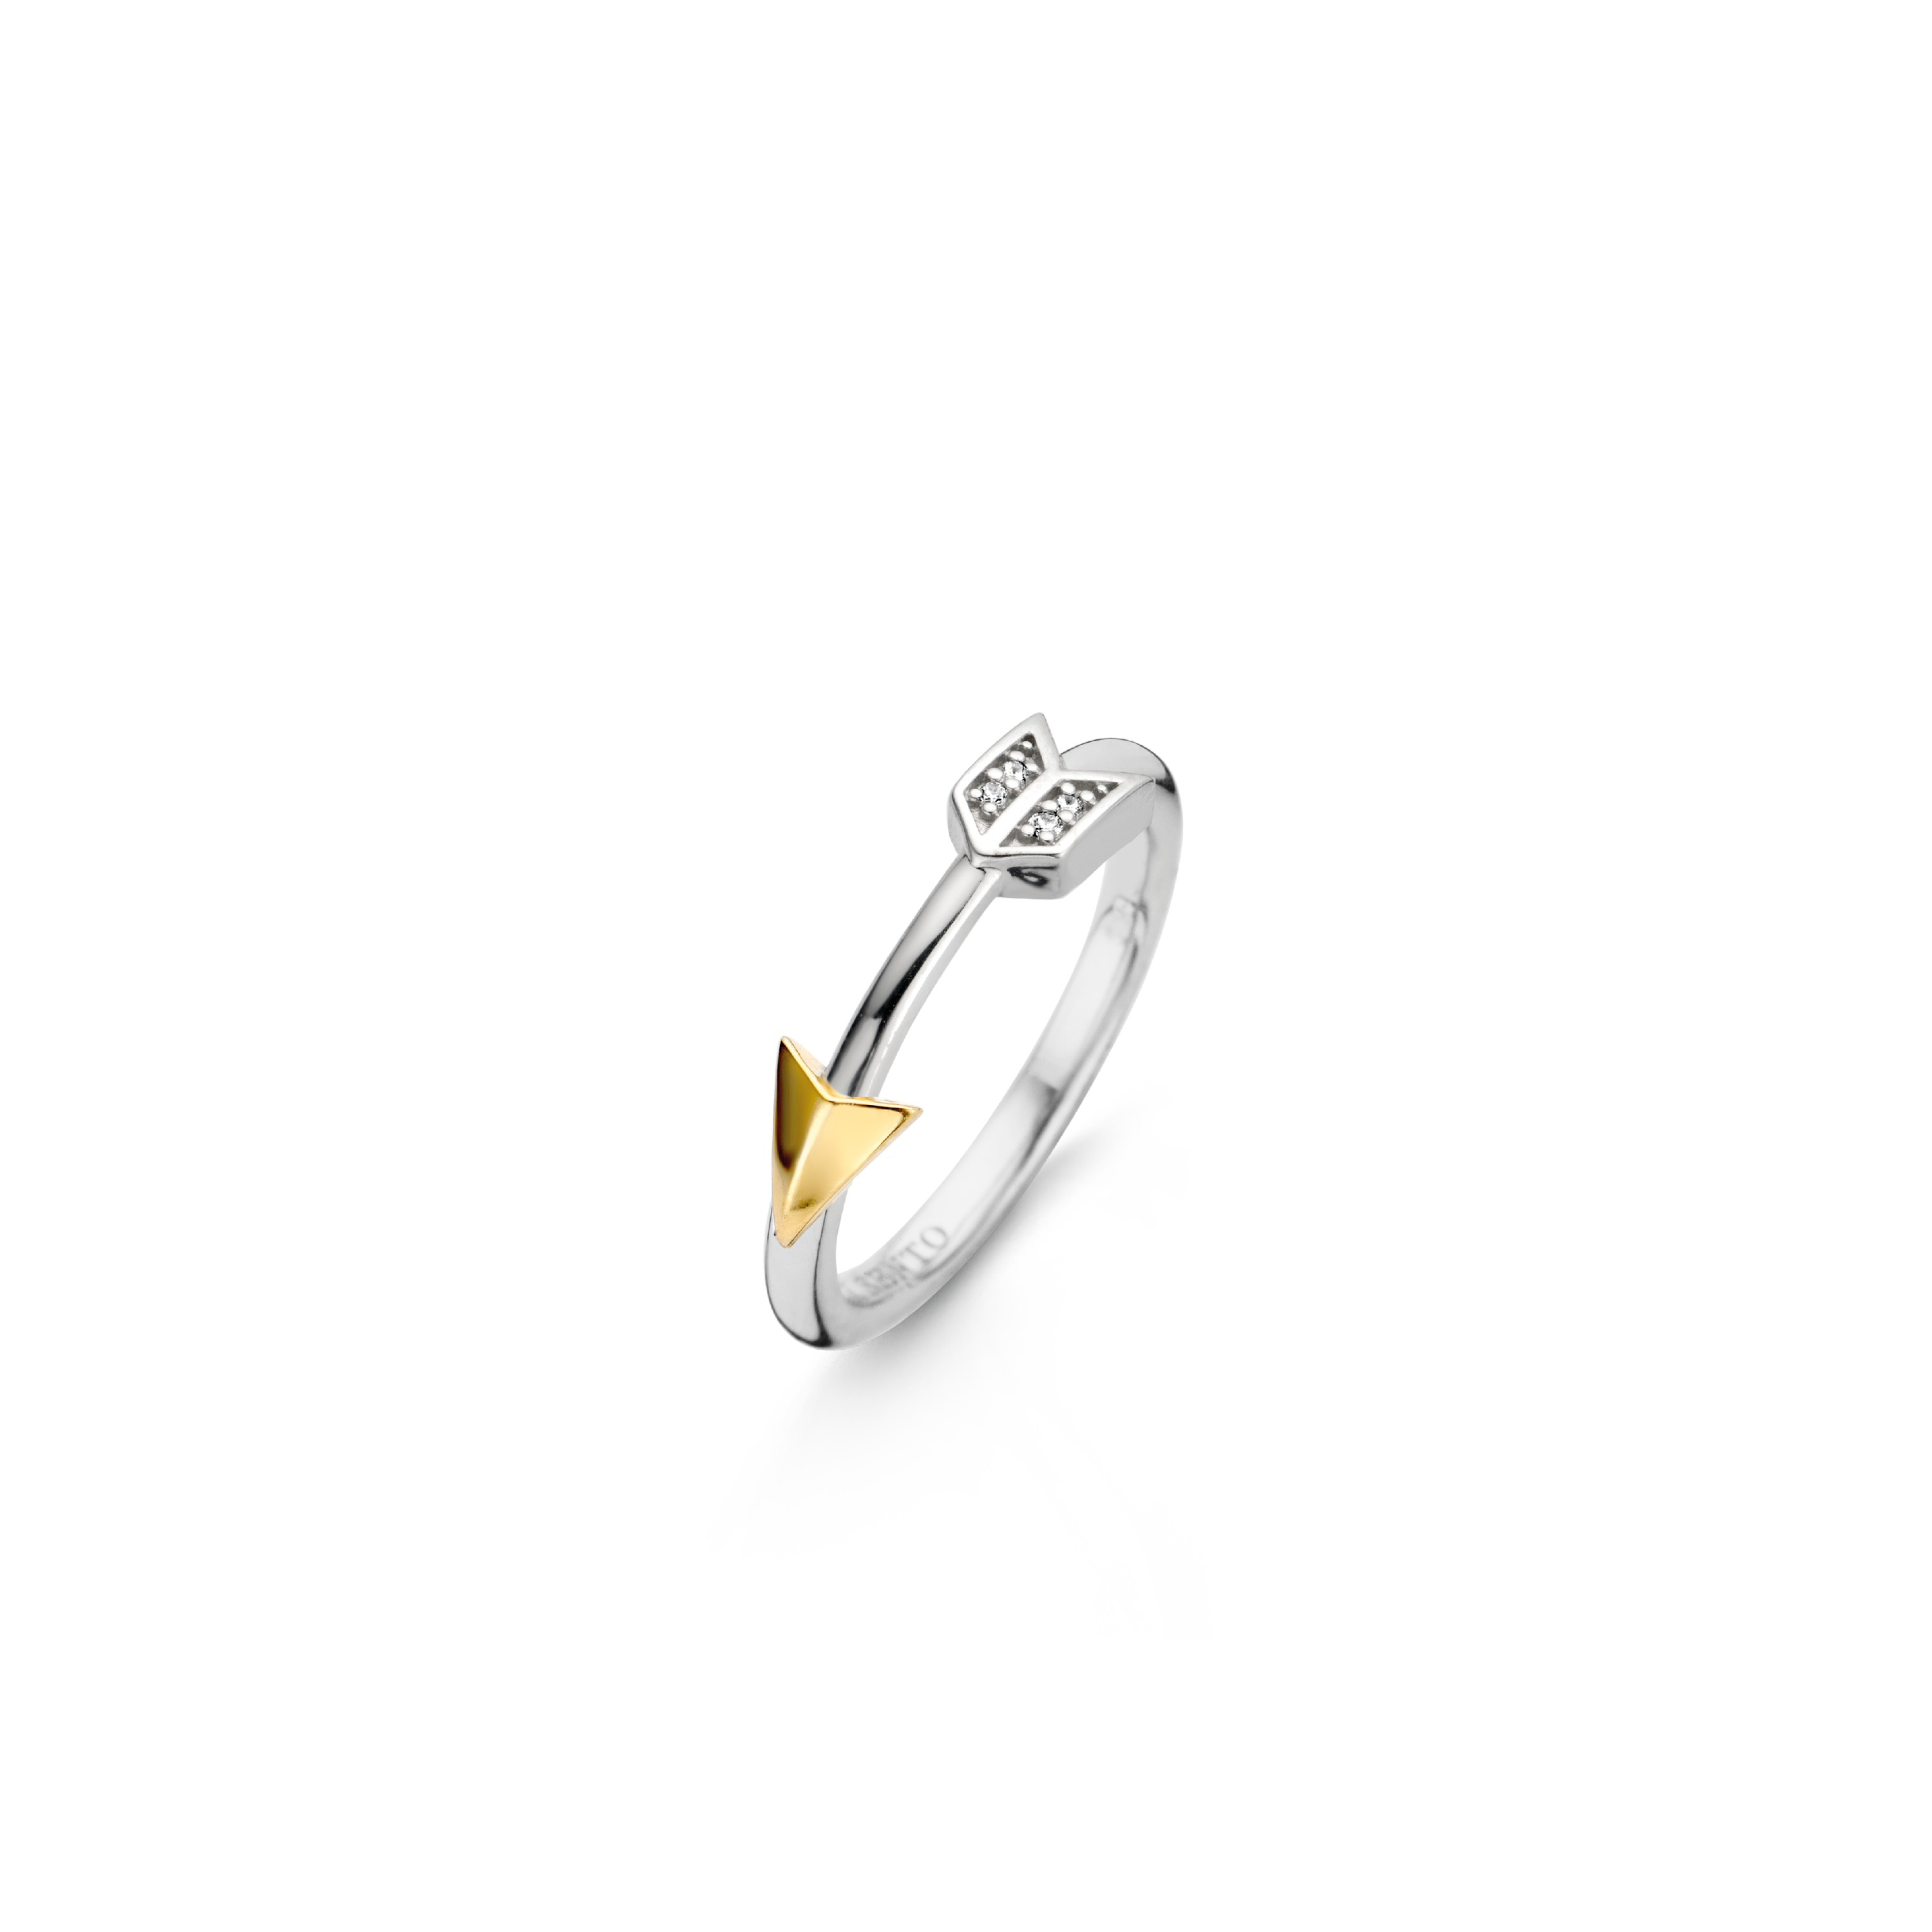 TI SENTO - Milano Ring 12198ZY Gala Jewelers Inc. White Oak, PA